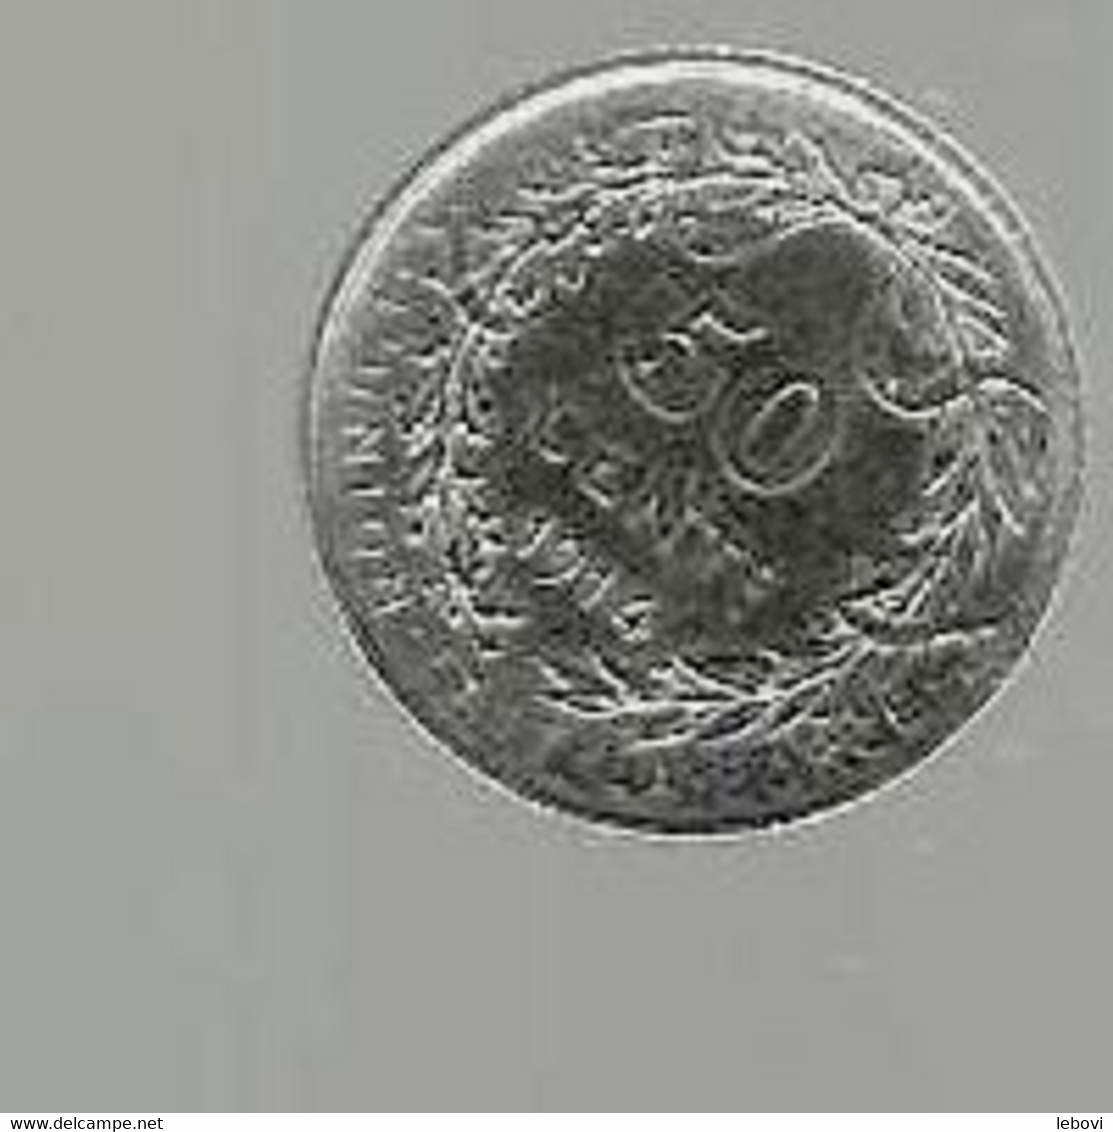 ALBERT I 50 CENTIMES 1914 FR - 50 Cents